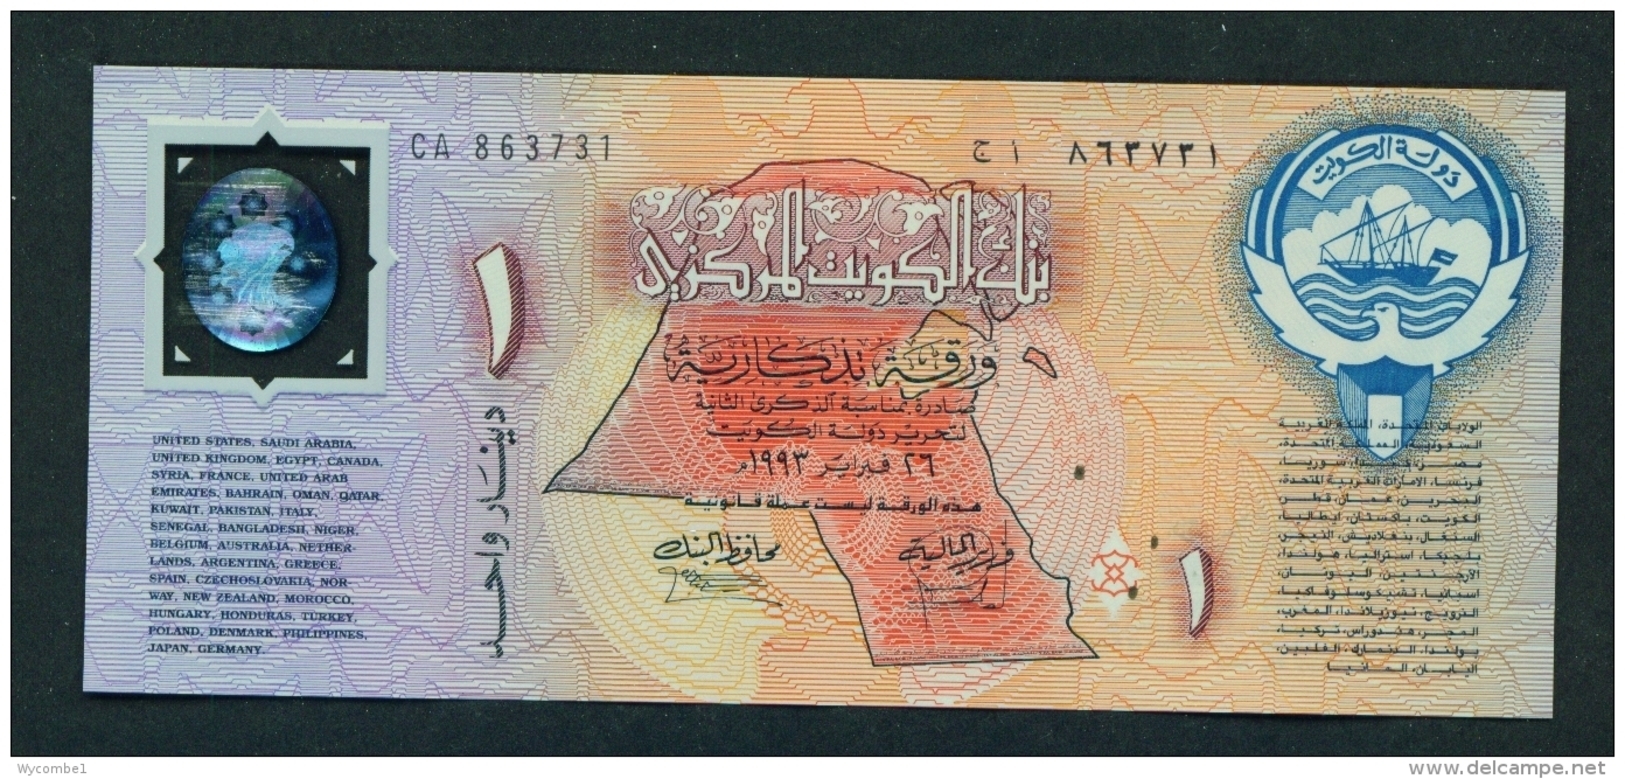 KUWAIT  -  26th February 1993  2nd Anniversary Of The Liberation Of Kuwait  1kd  UNC Commemorative Banknote In Folder - Kuwait